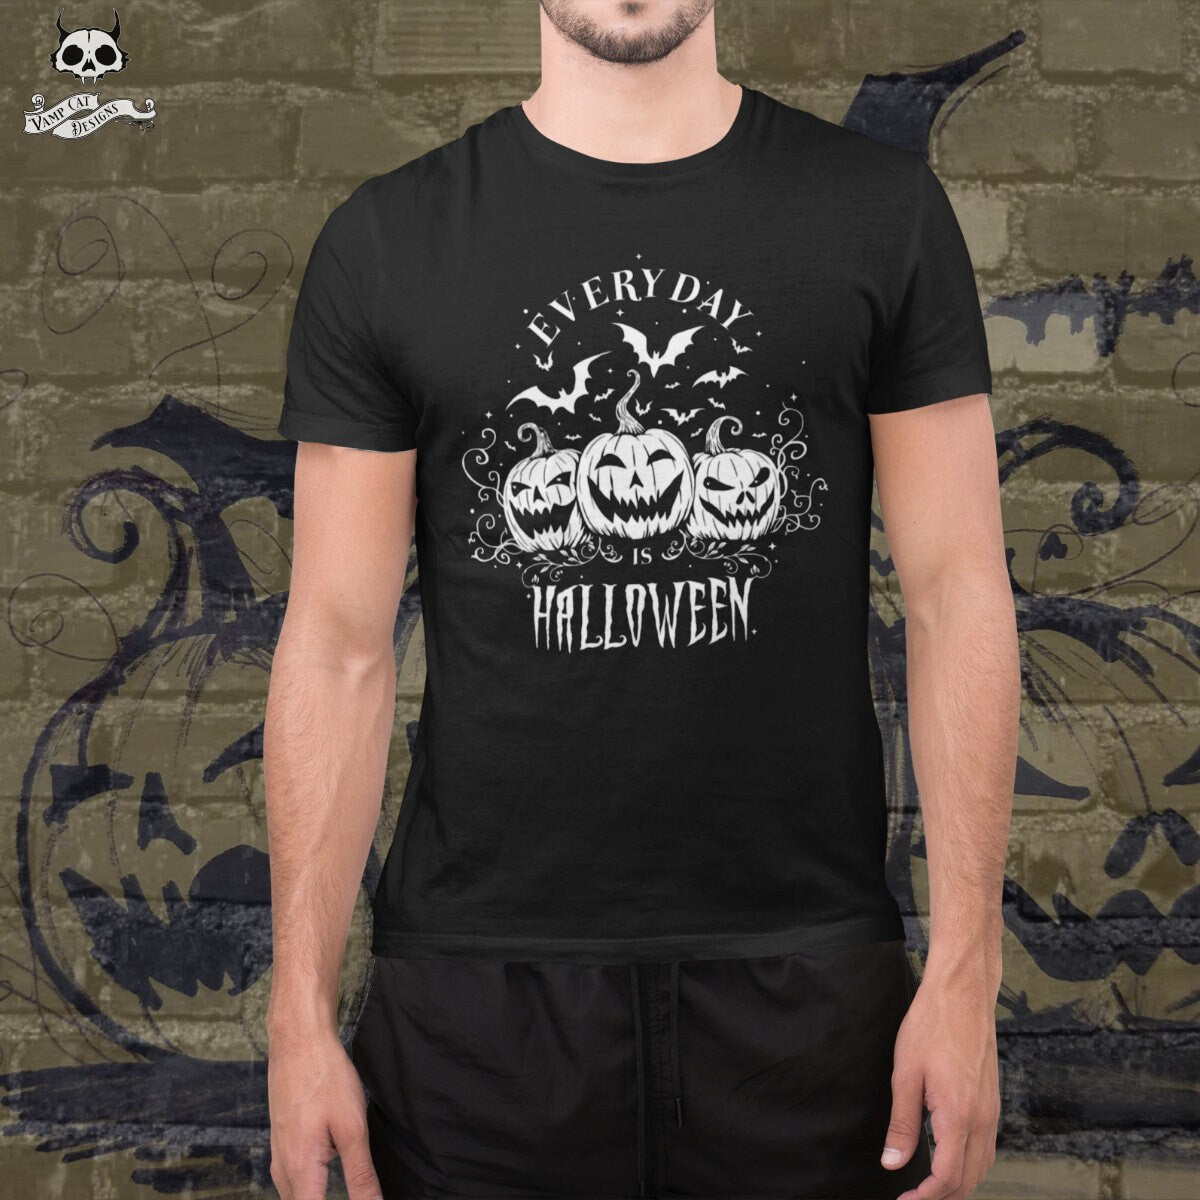 Everyday Is Halloween-Unisex Jersey Tee-Halloween Art Apparel-Halloween Tee-Men and Women-Gothic-Jack O' Lanterns And Bats T-Shirt